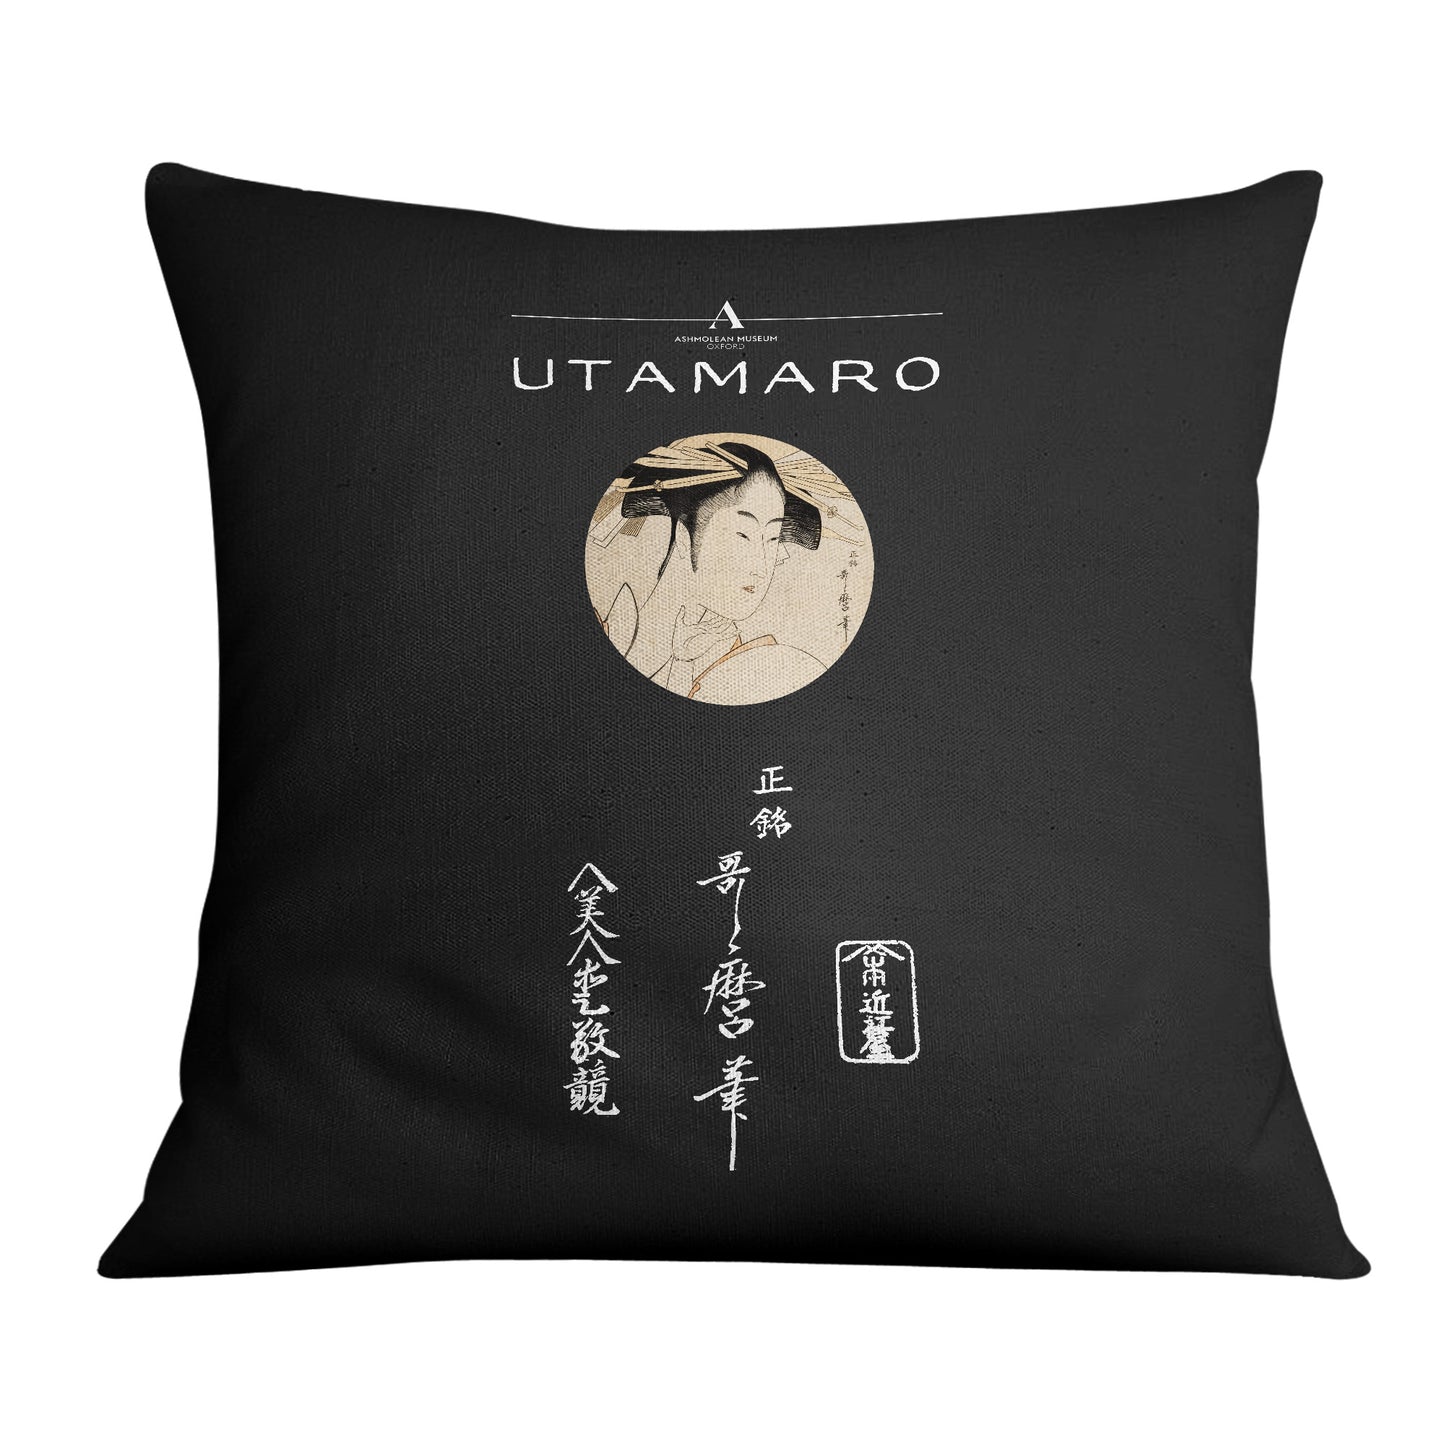 Ashmolean Utamaro Cushion